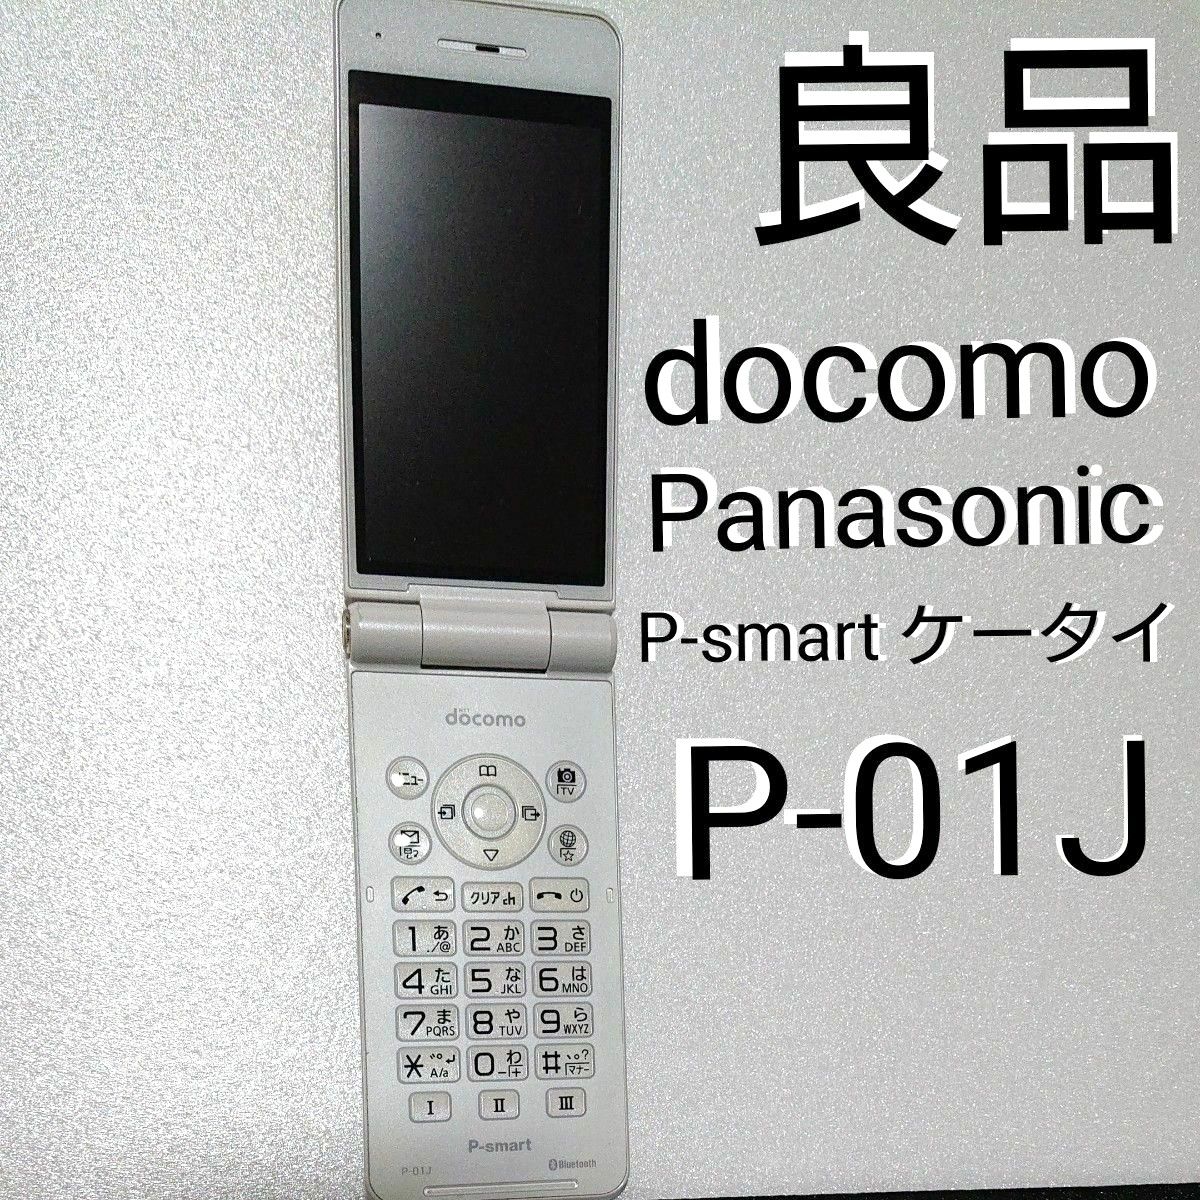 P-01J Panasonic ガラケー docomo ガラホ ドコモ - 携帯電話